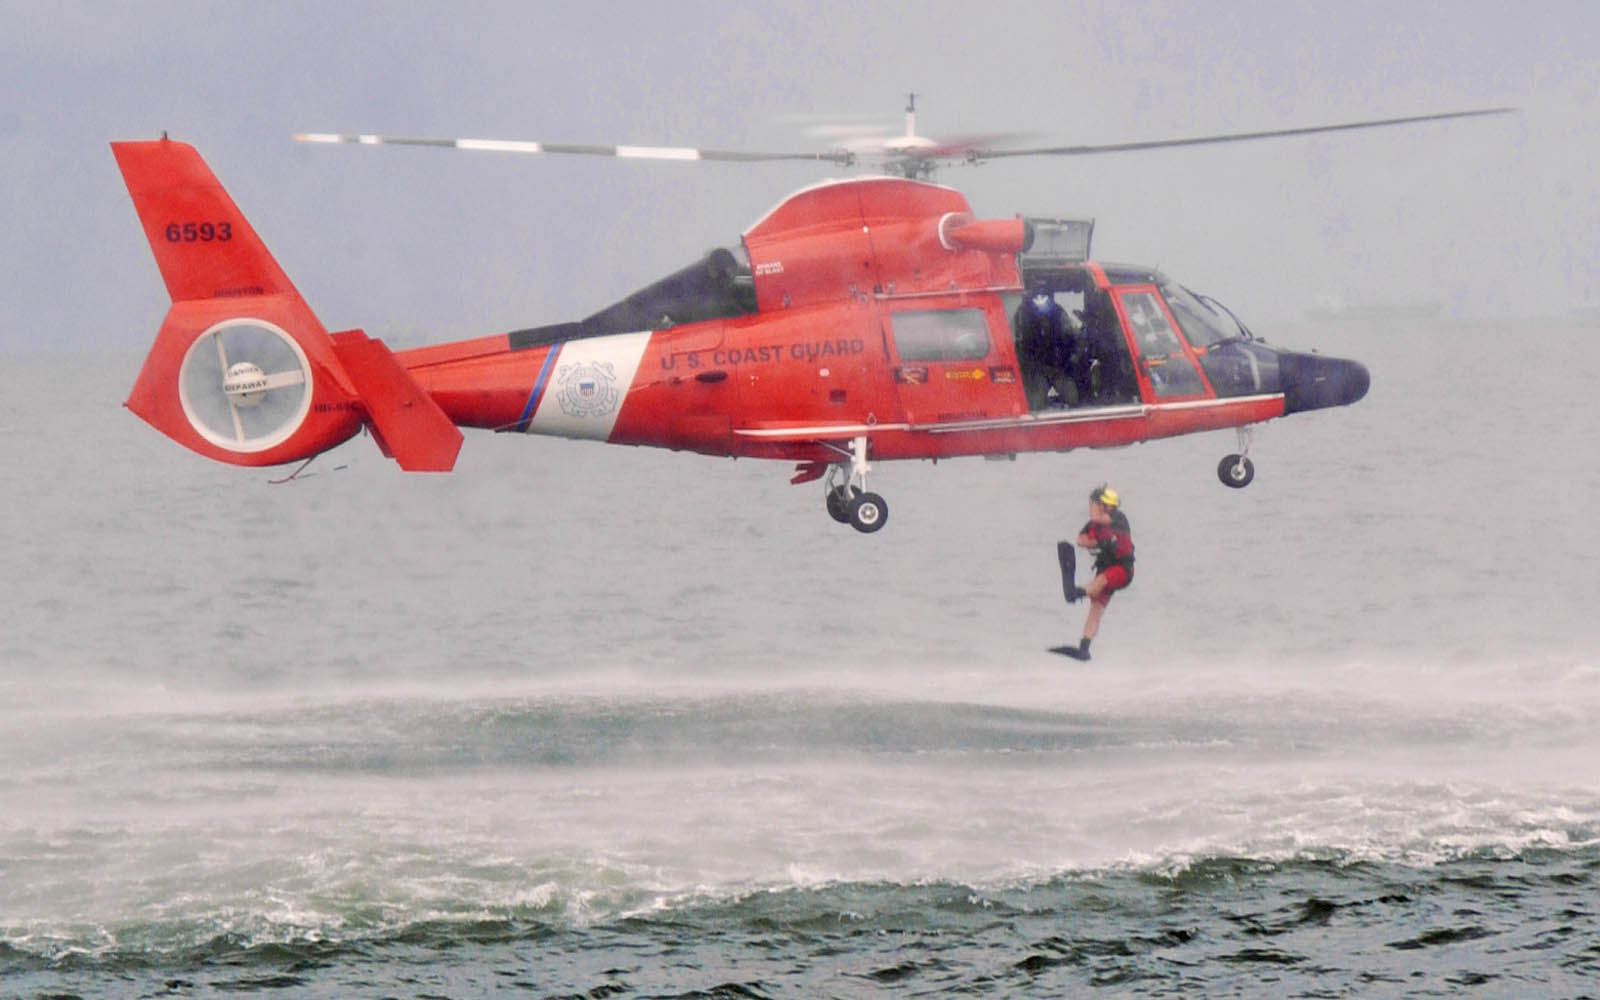  US Coast Guard Helicopter Wallpapers Desktop Wallpapers Online